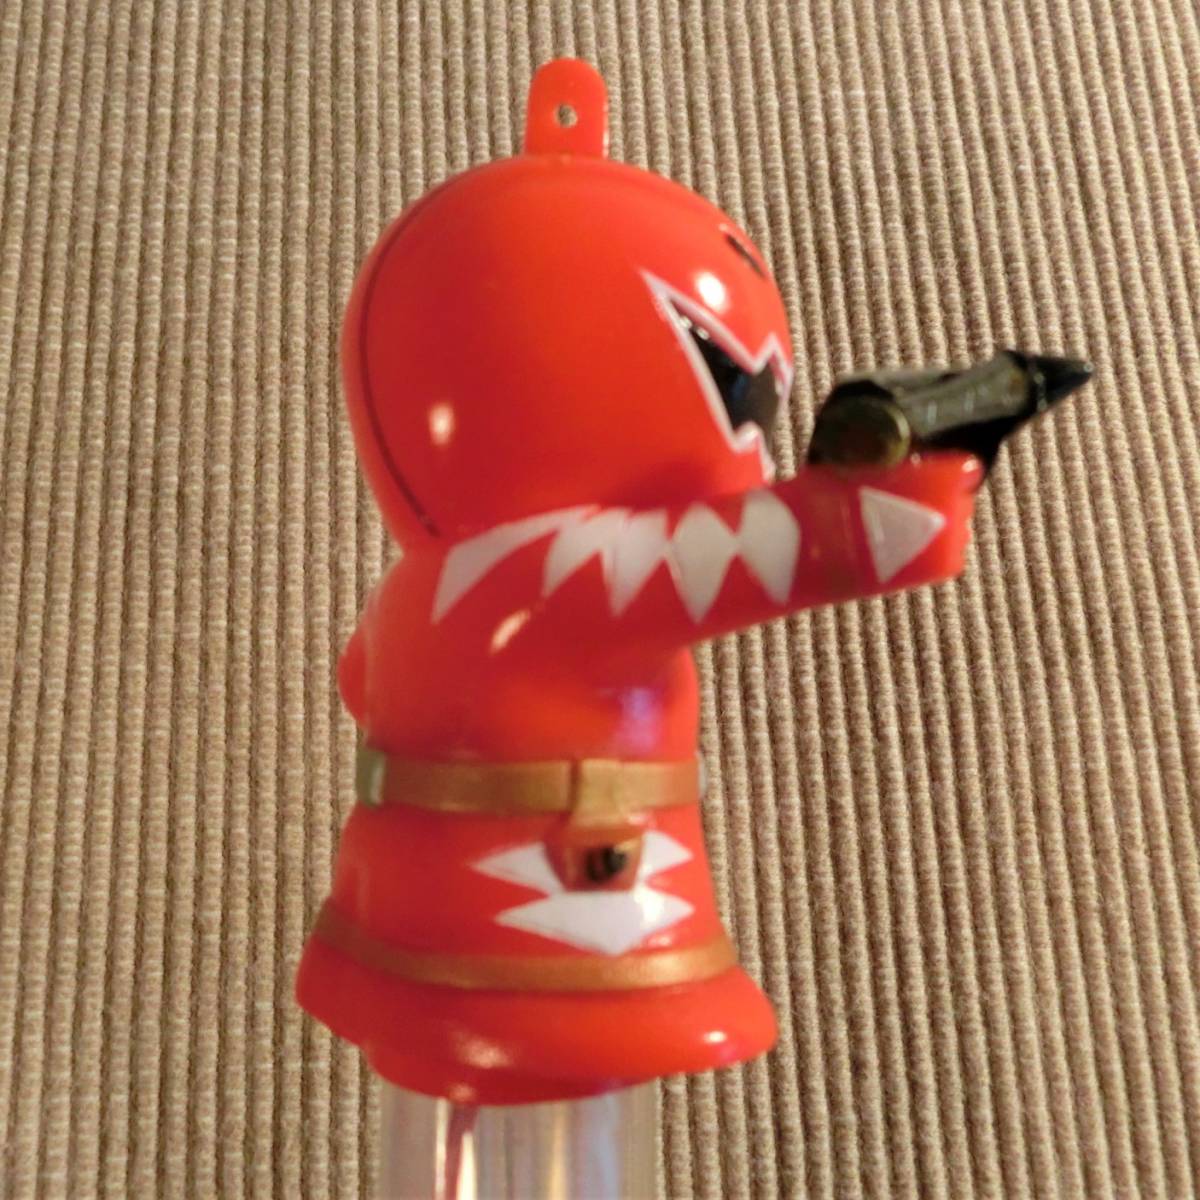  Kirakira shines character stick aba Ranger aba red dead stock rare rare toy figure light poppy higashi .